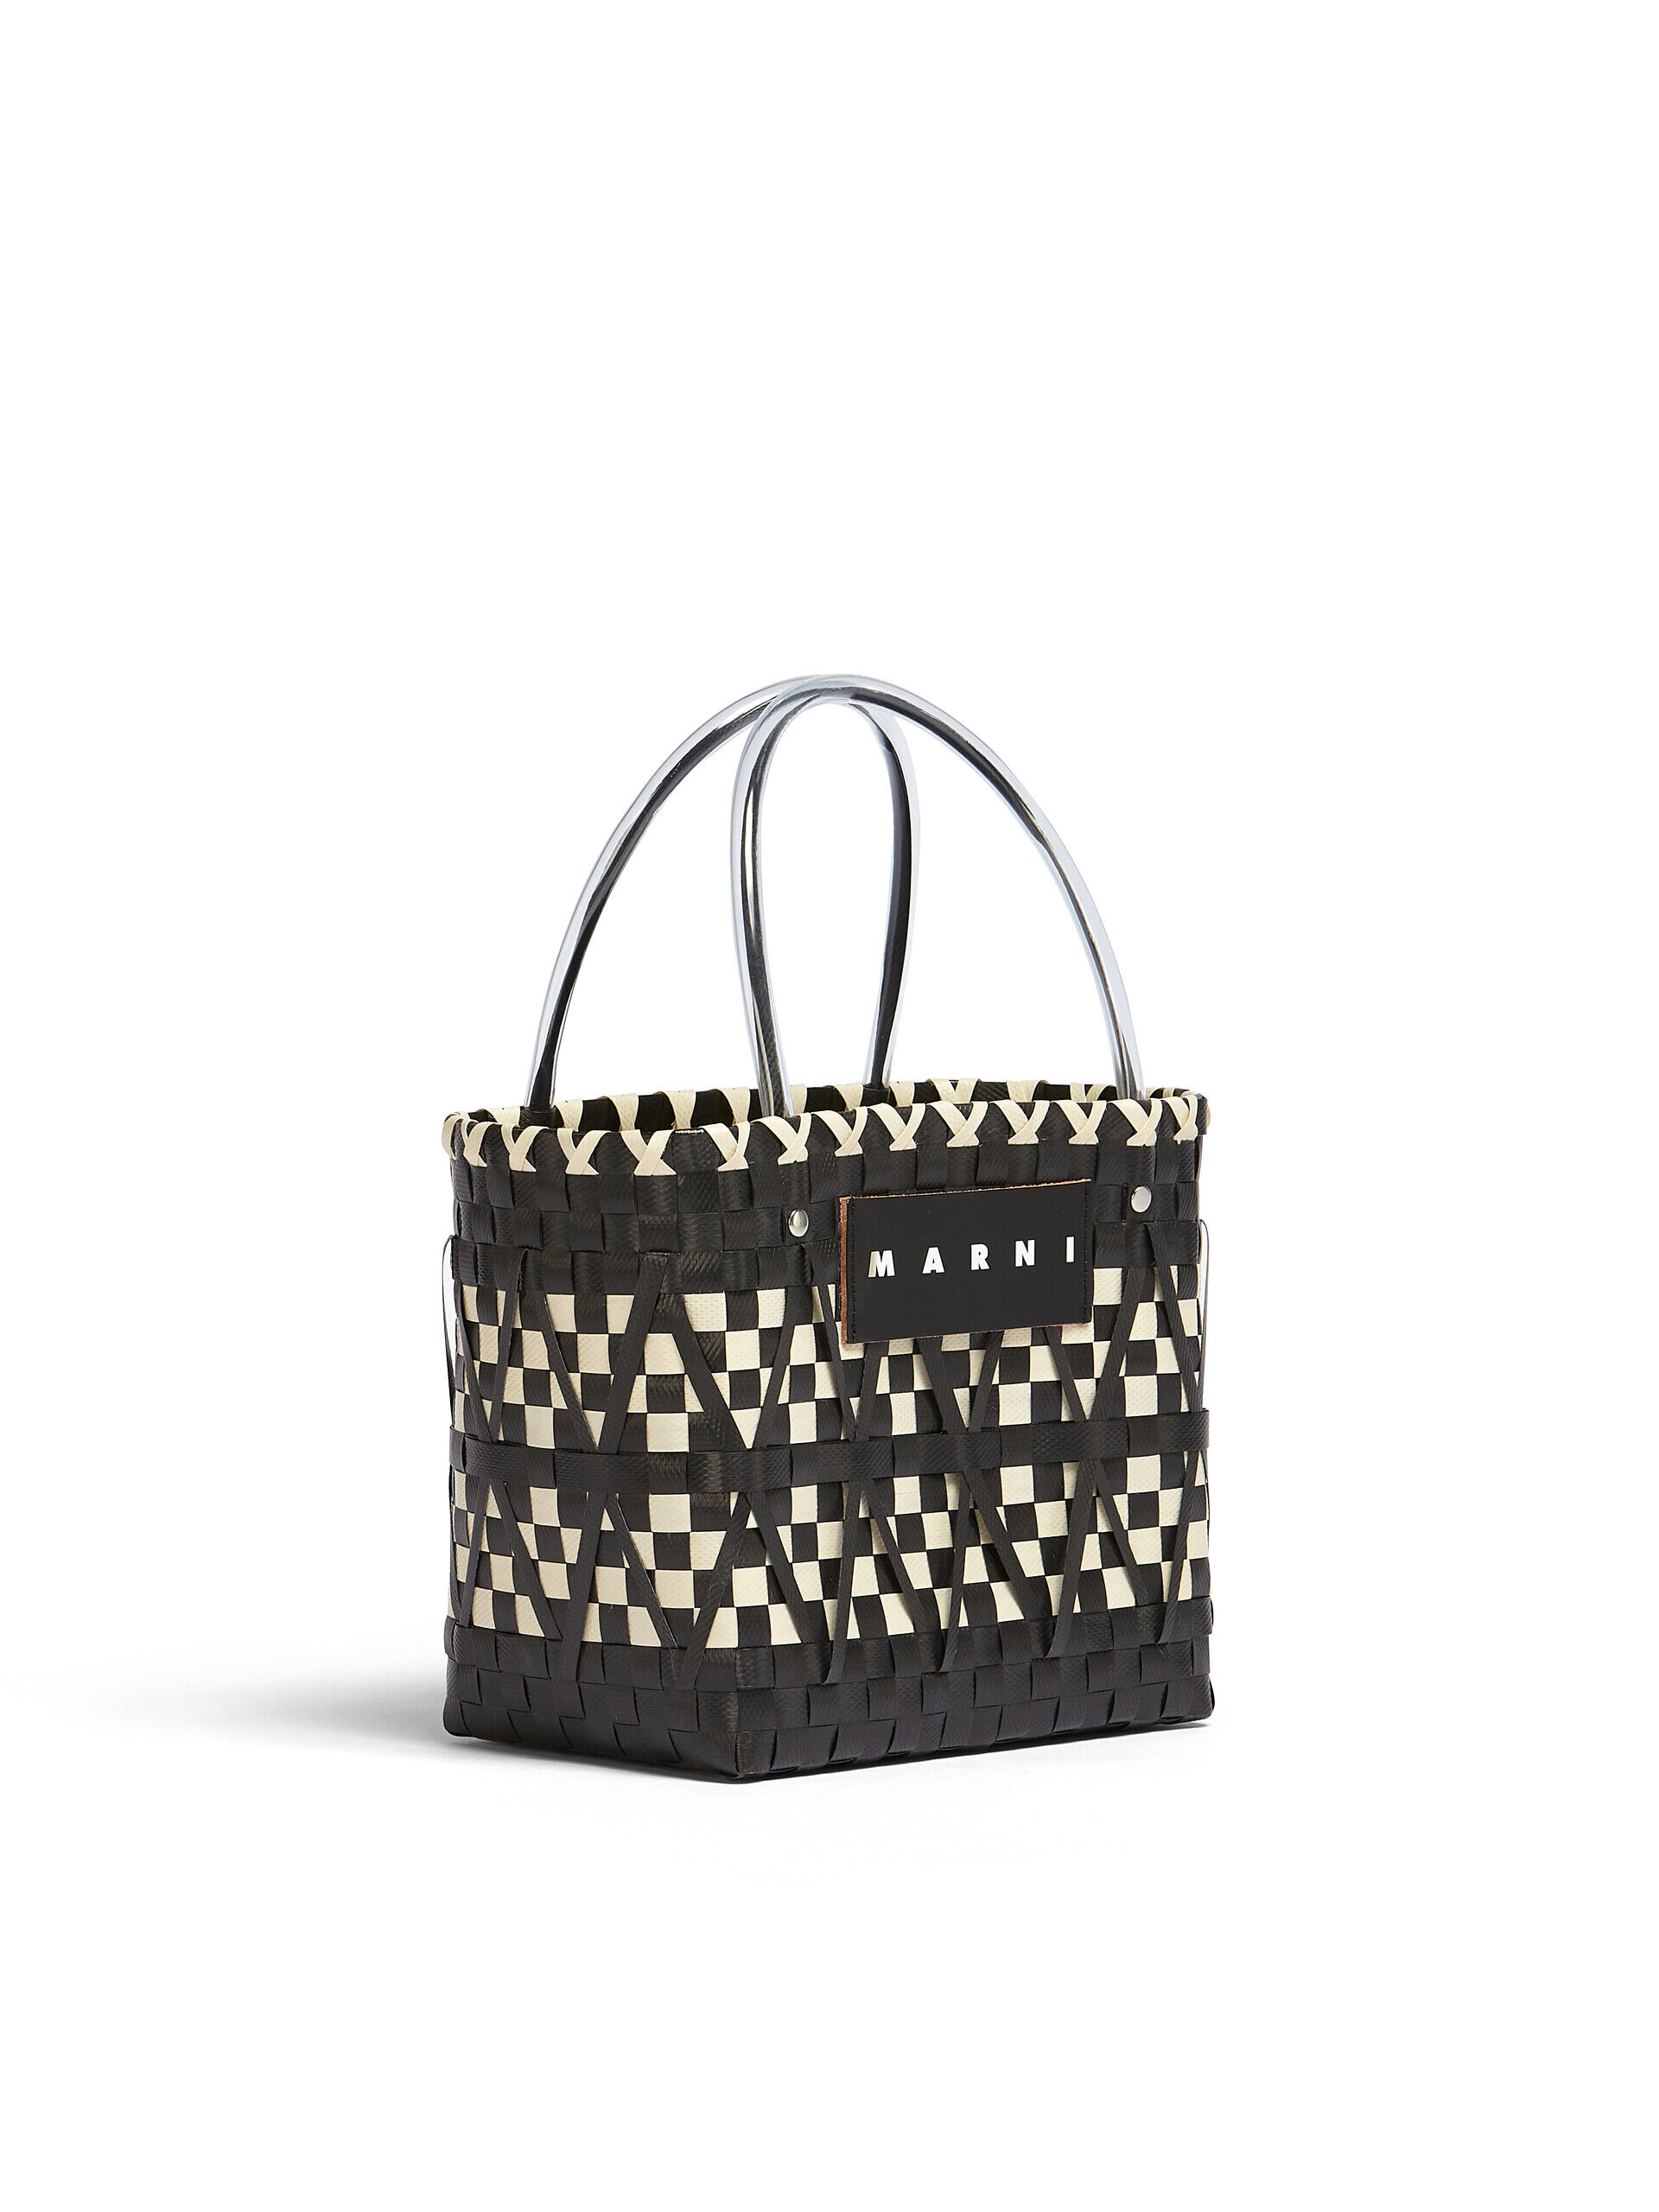 MARNI MARKET black and white shopping bag | Marni